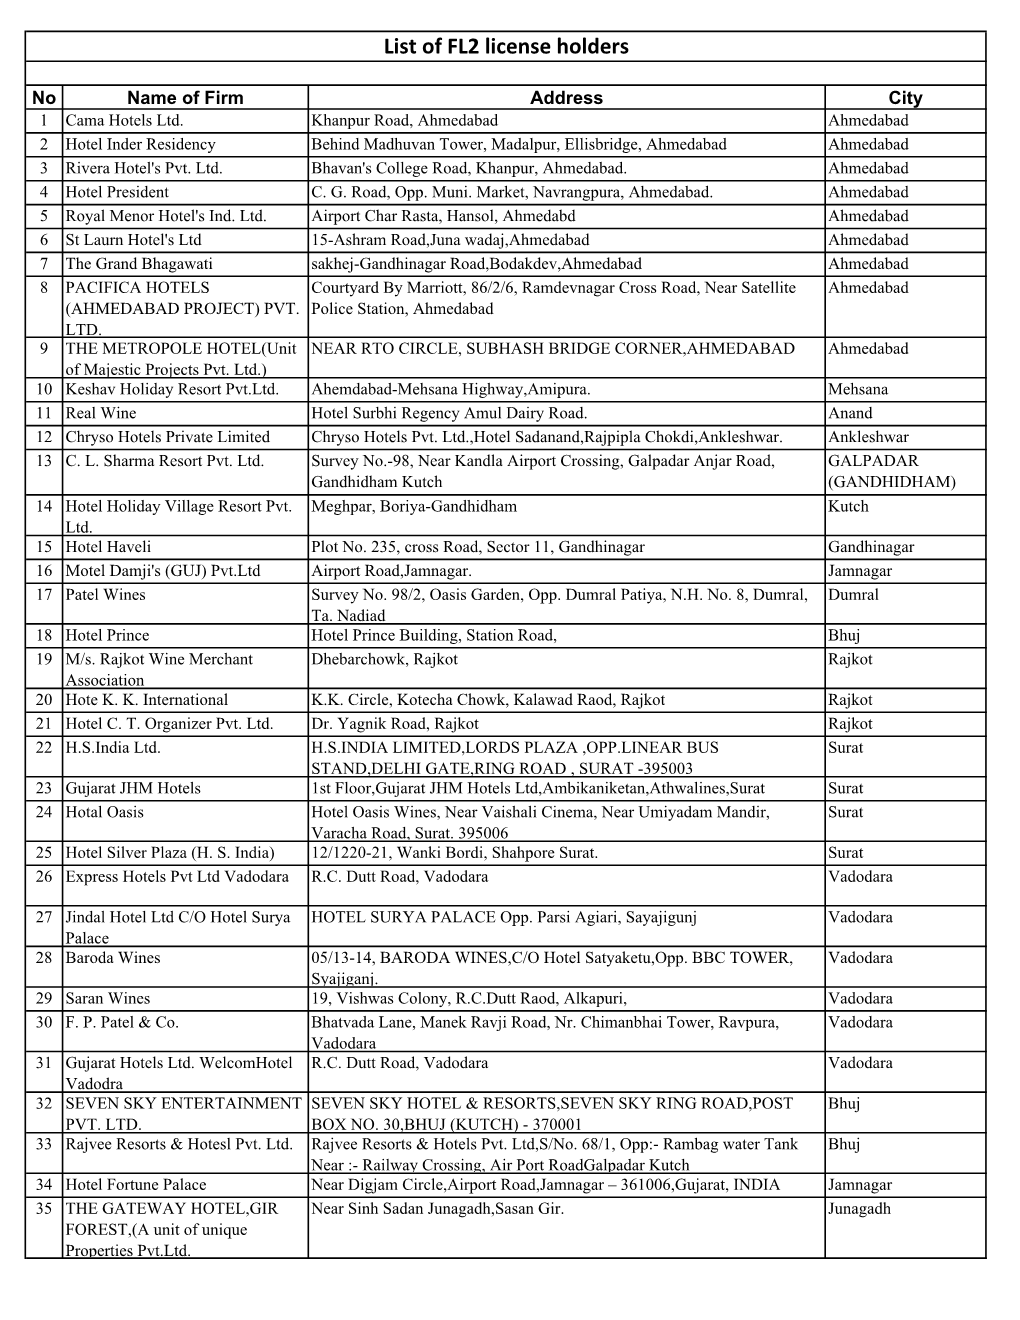 List of FL2 License Holders